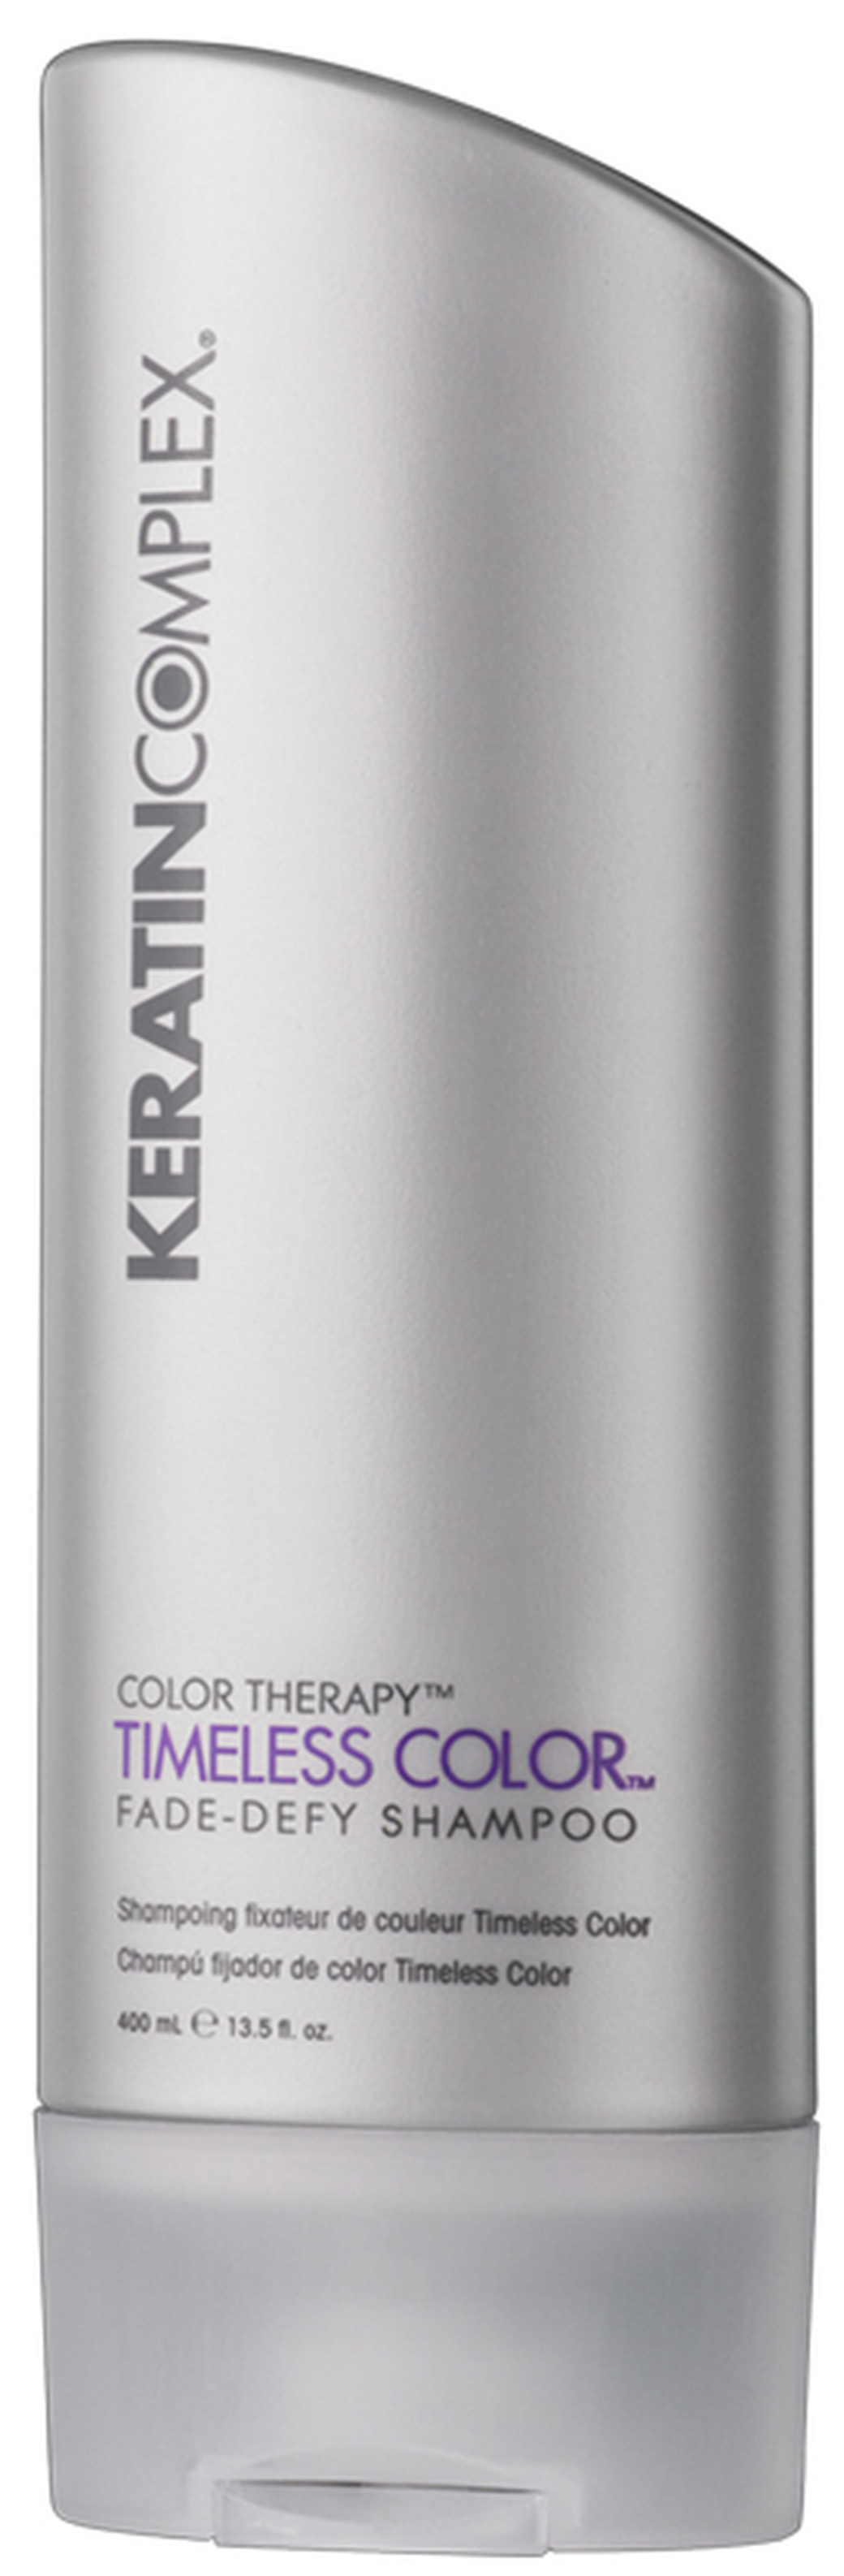 Keratin Complex шампунь для поддержания яркости цвета Keratin Complex, 400 ml фото